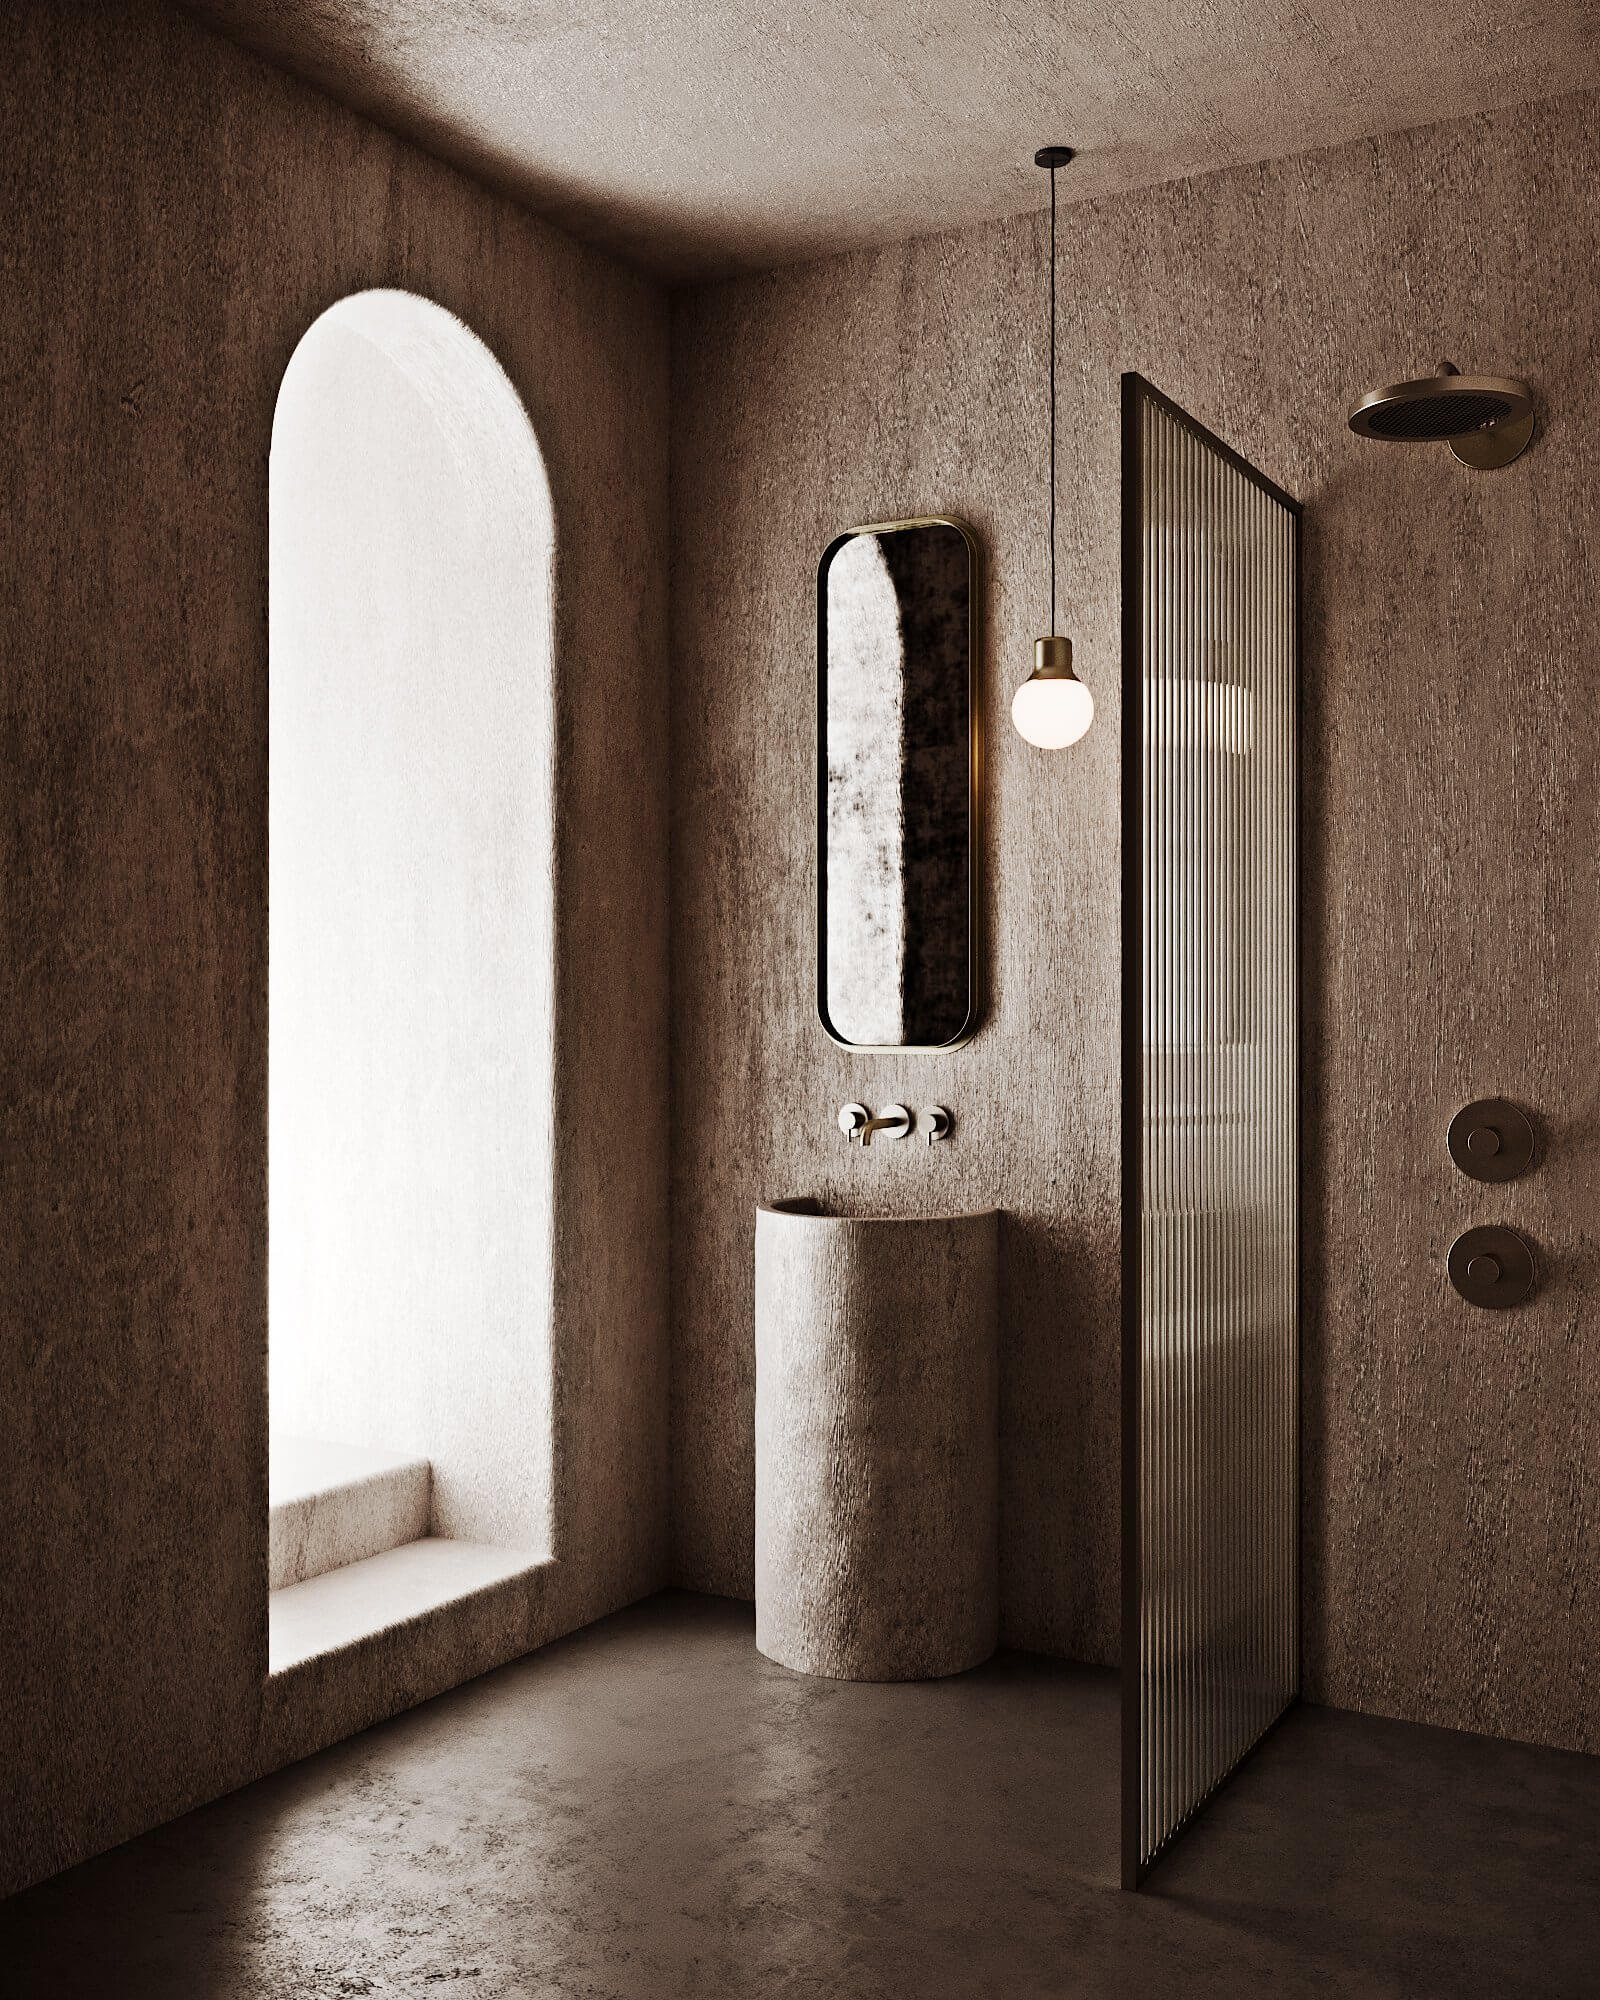 Monochrome bathroom design - cgi visualization